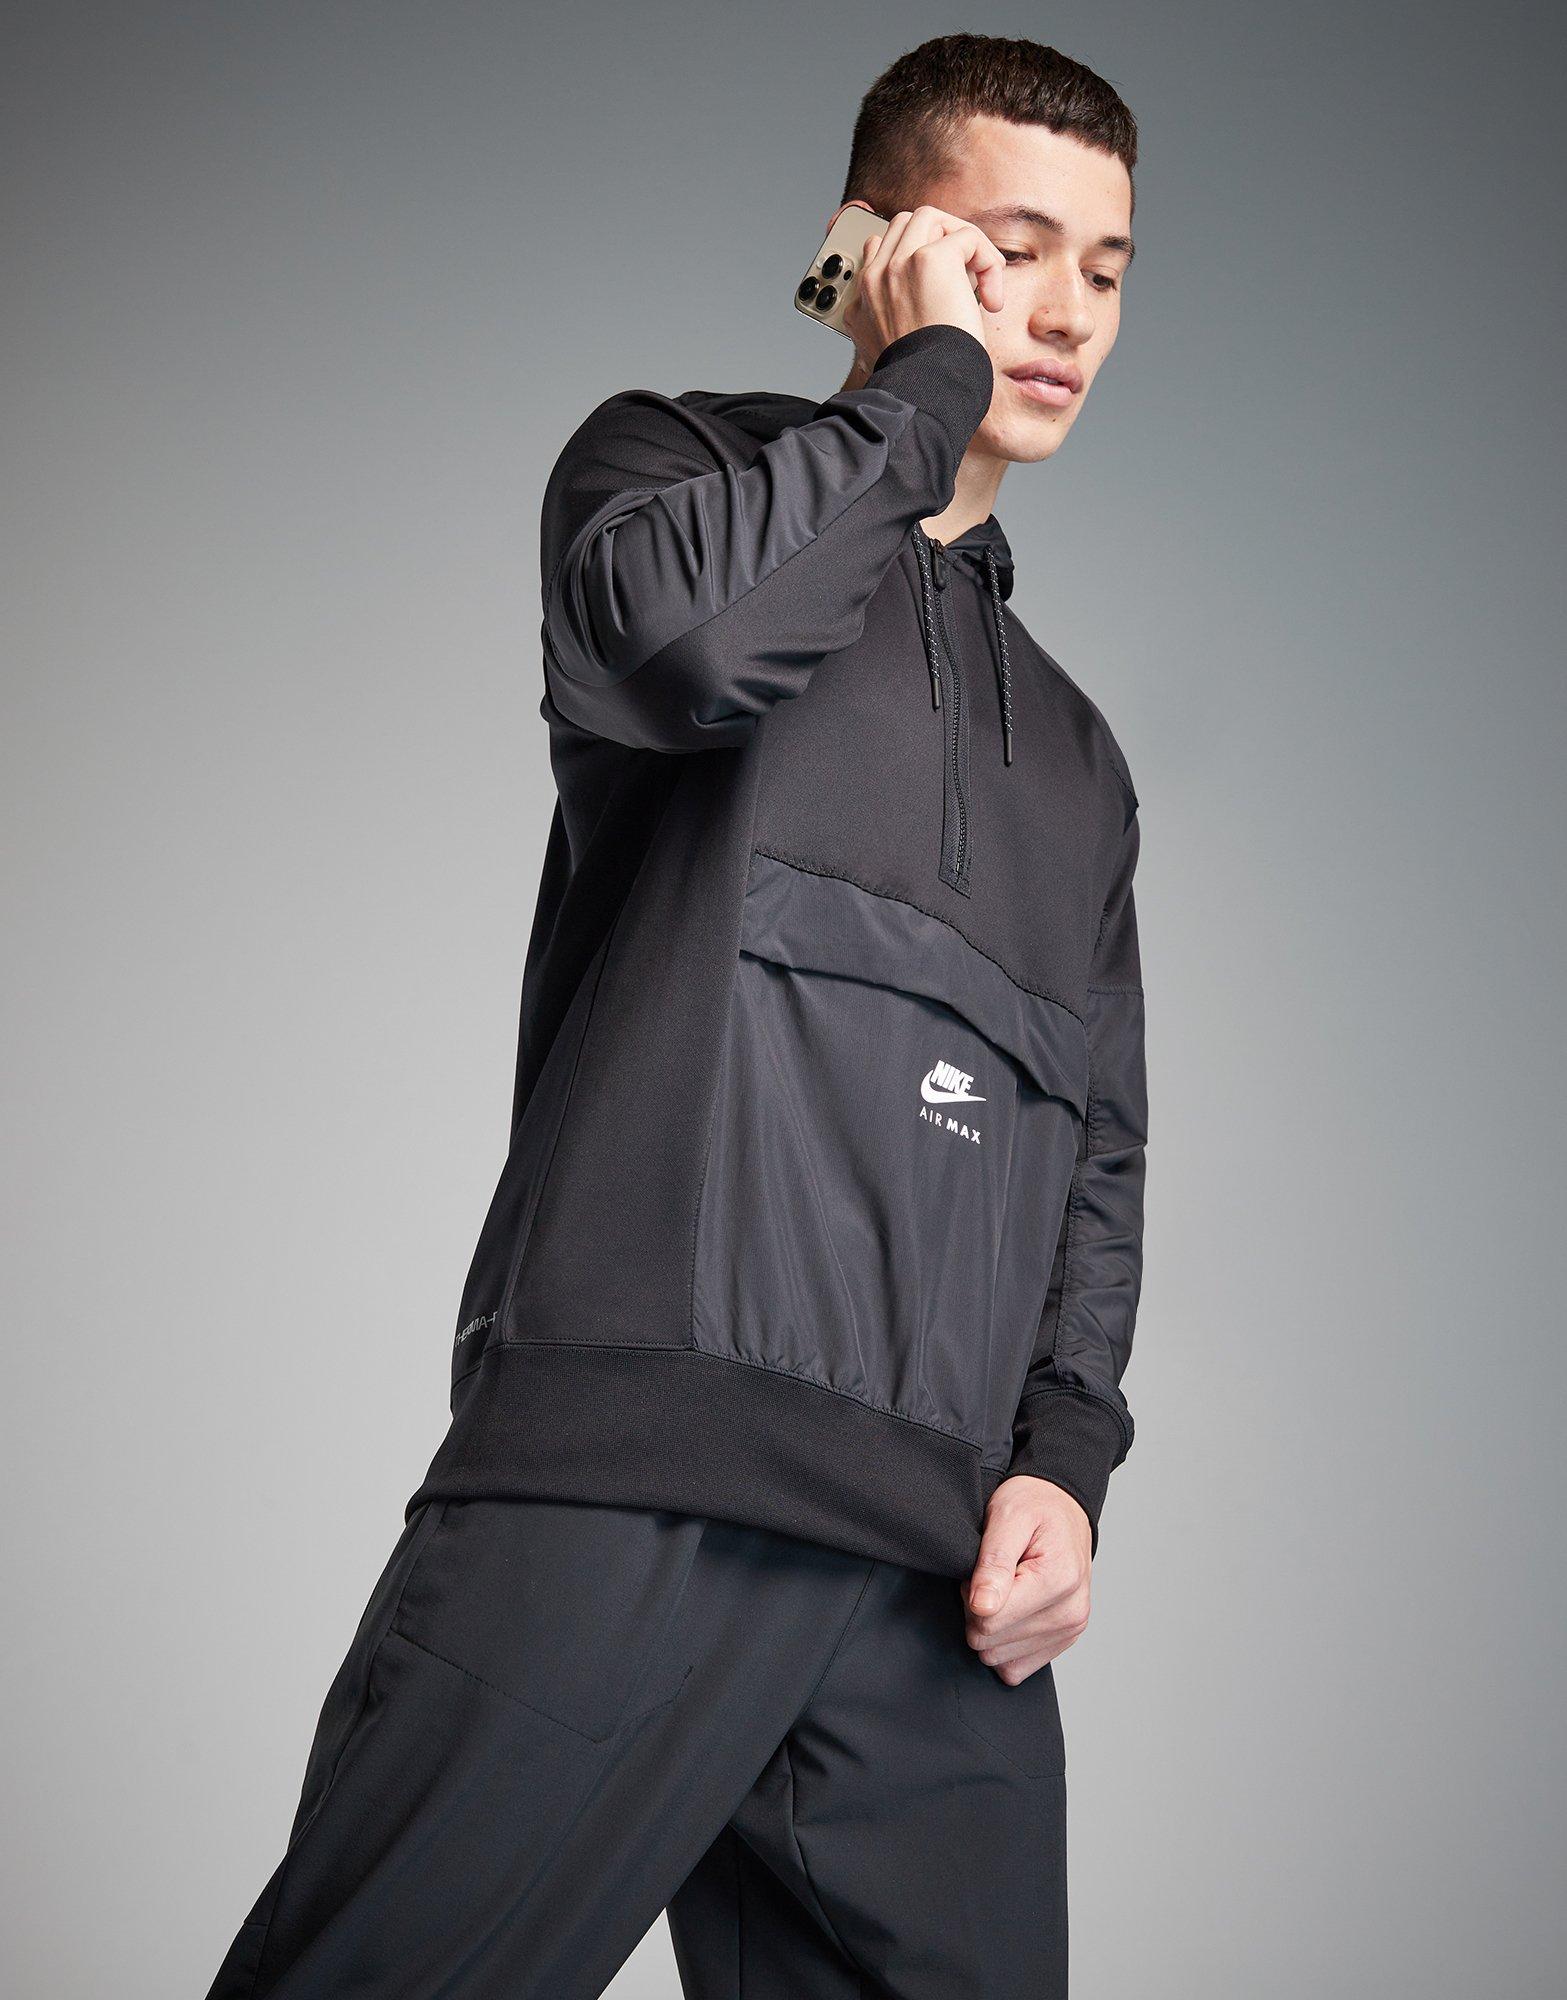 Nike Air zipped front leggings in black